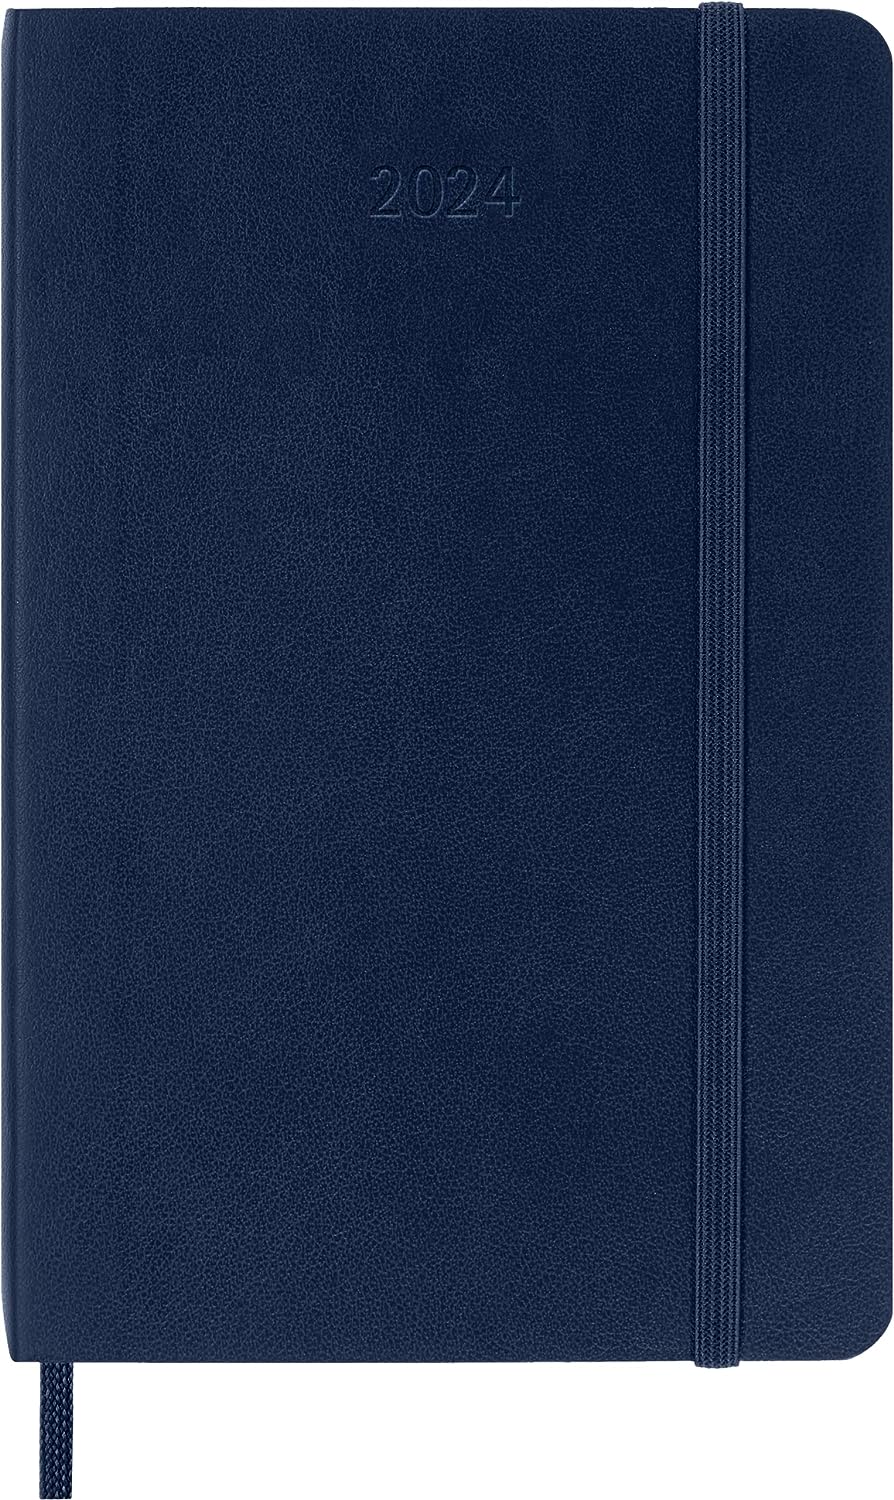 Agenda 2024 - 12-Month Weekly - Pocket, Soft Cover - Sapphire Blue | Moleskine